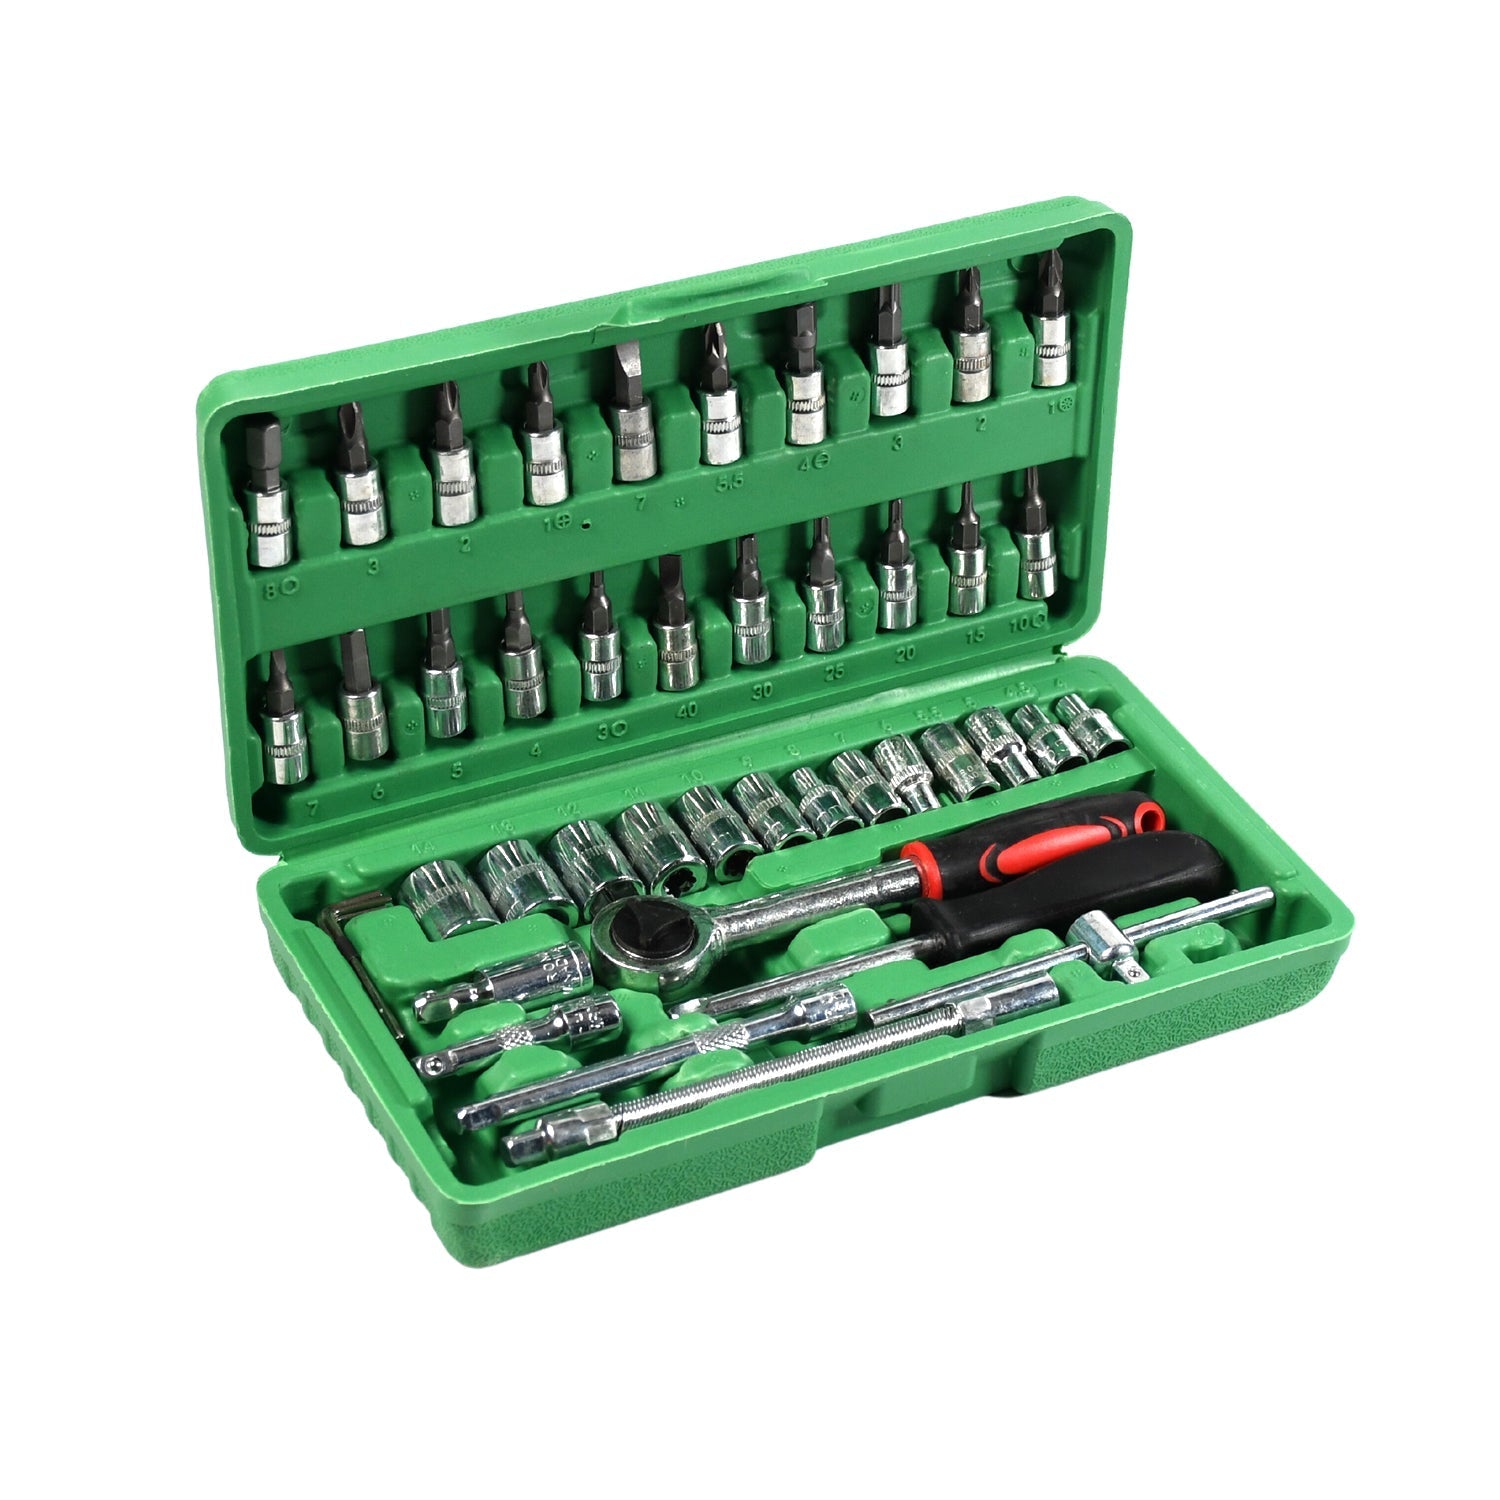 7535 Mechanic 46pc Tool Kit Set High Quality Tool Kit DeoDap